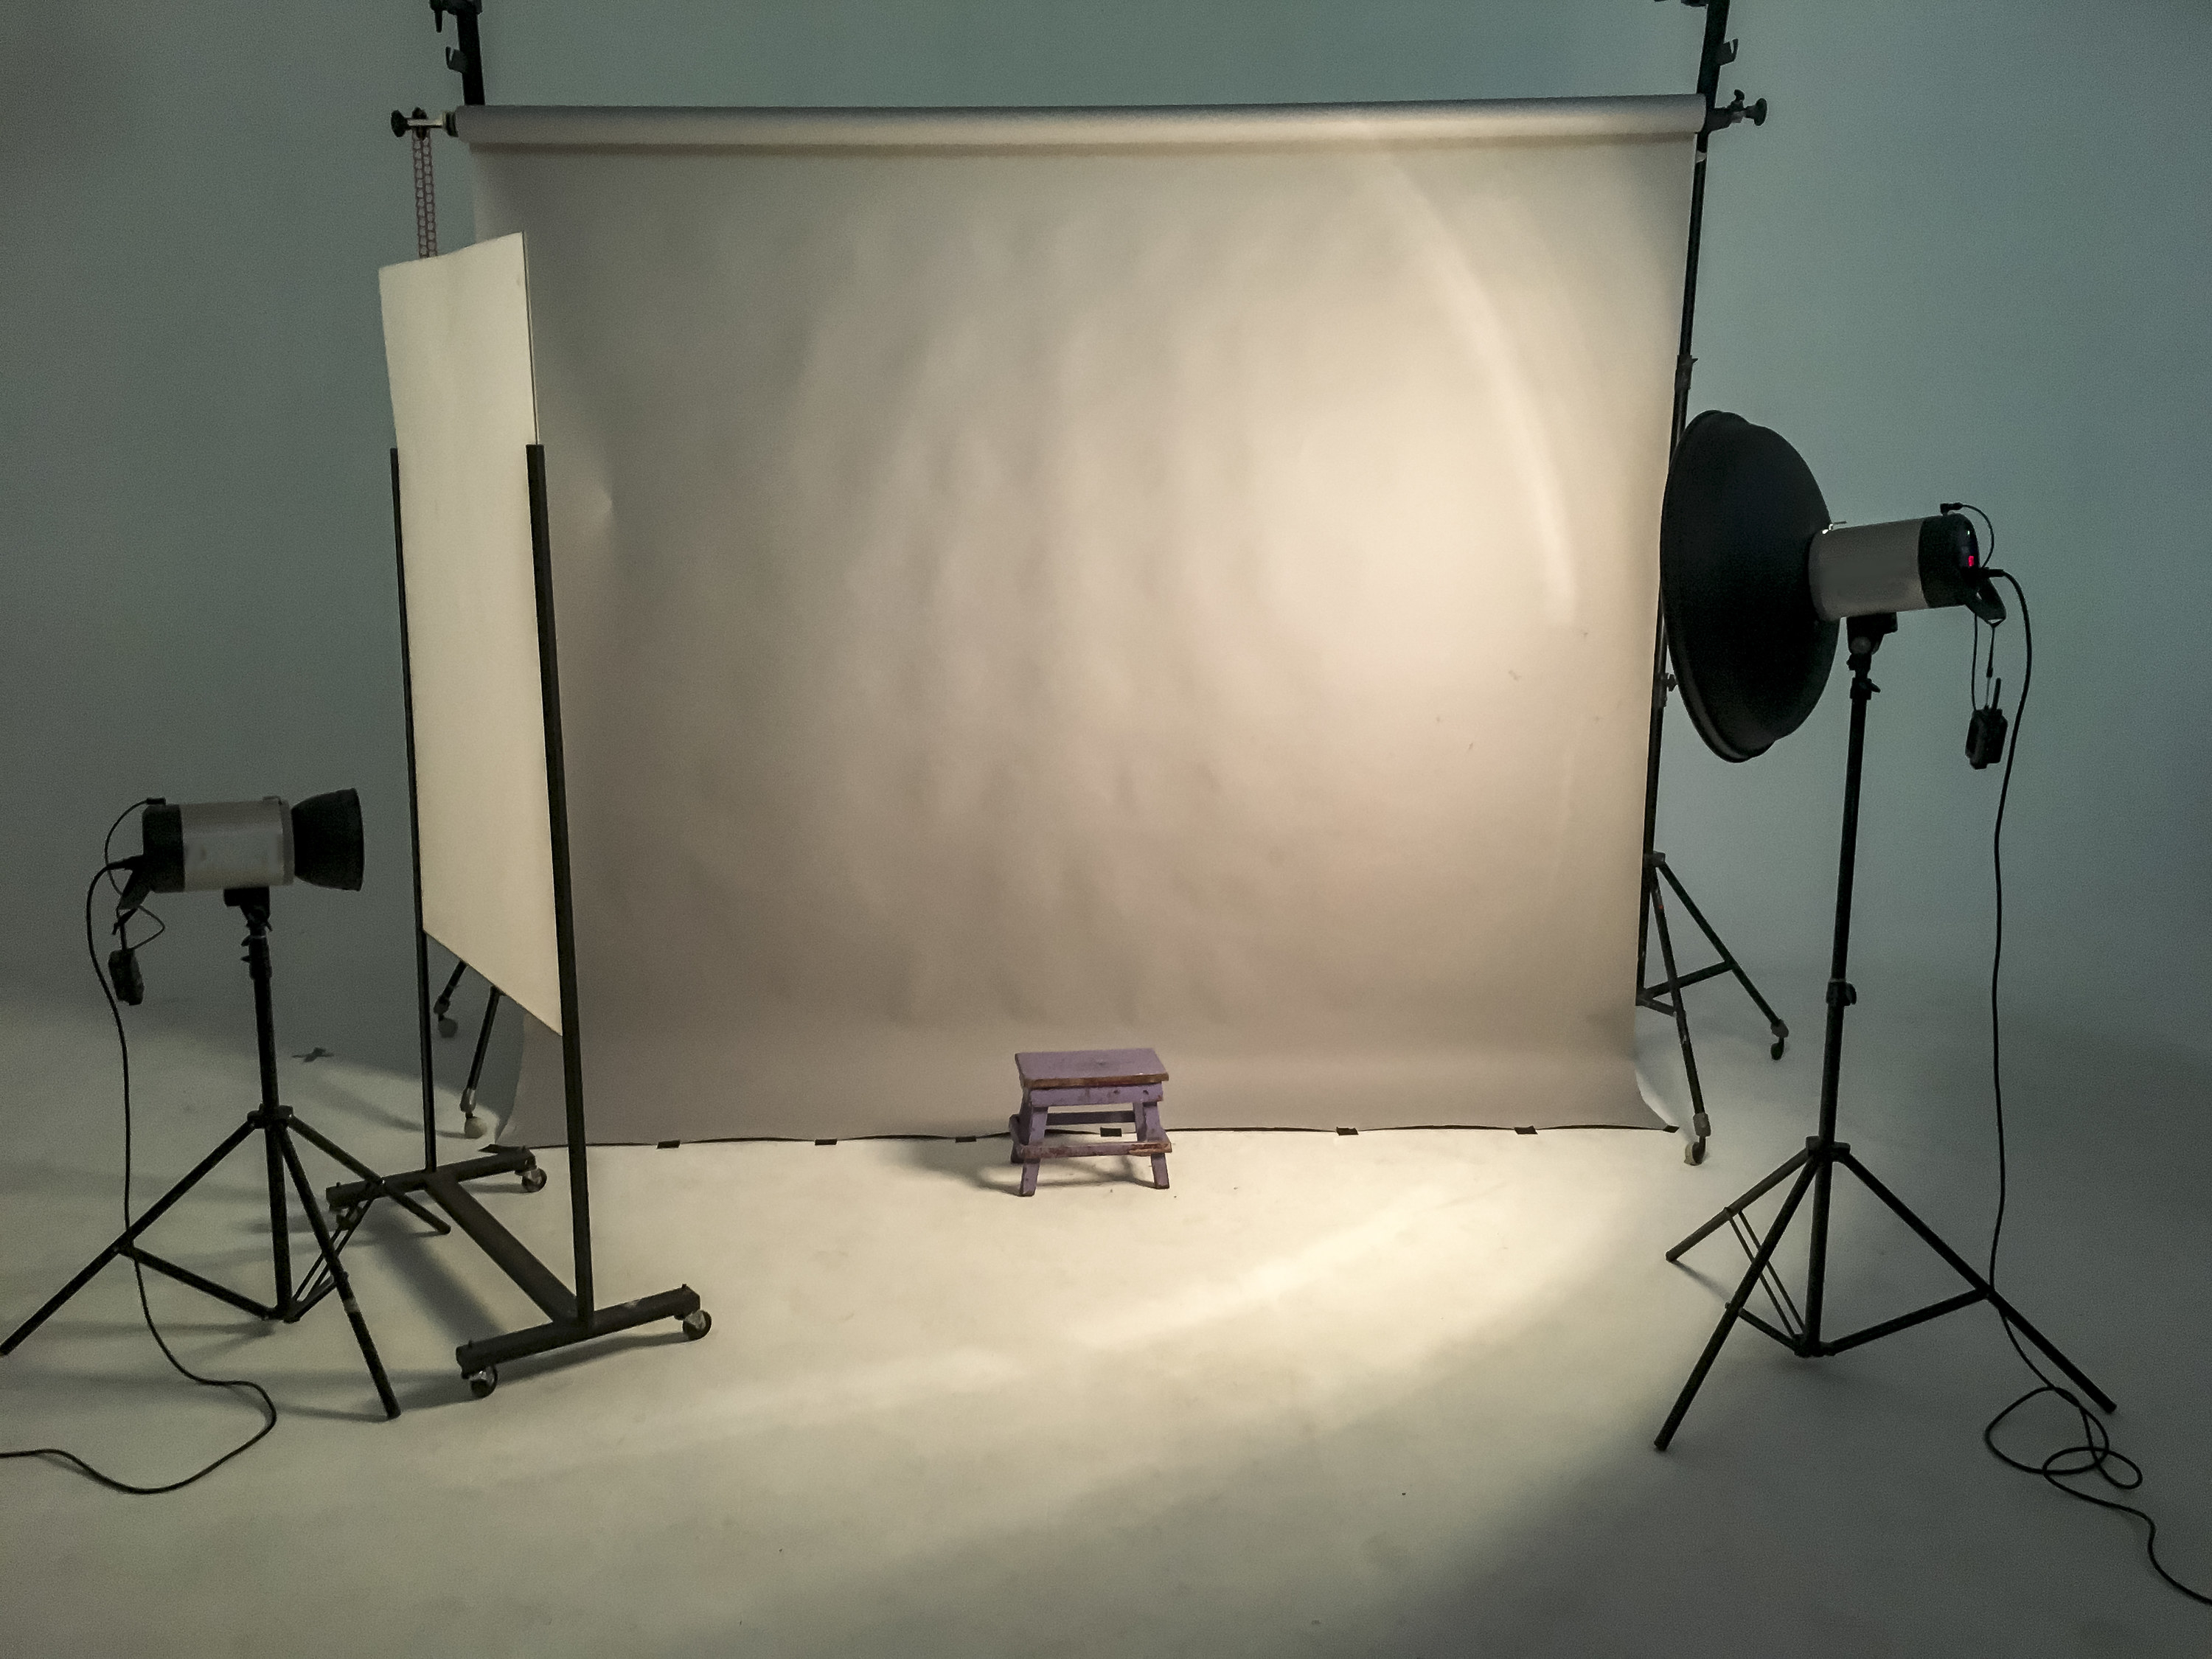 A photo studio set